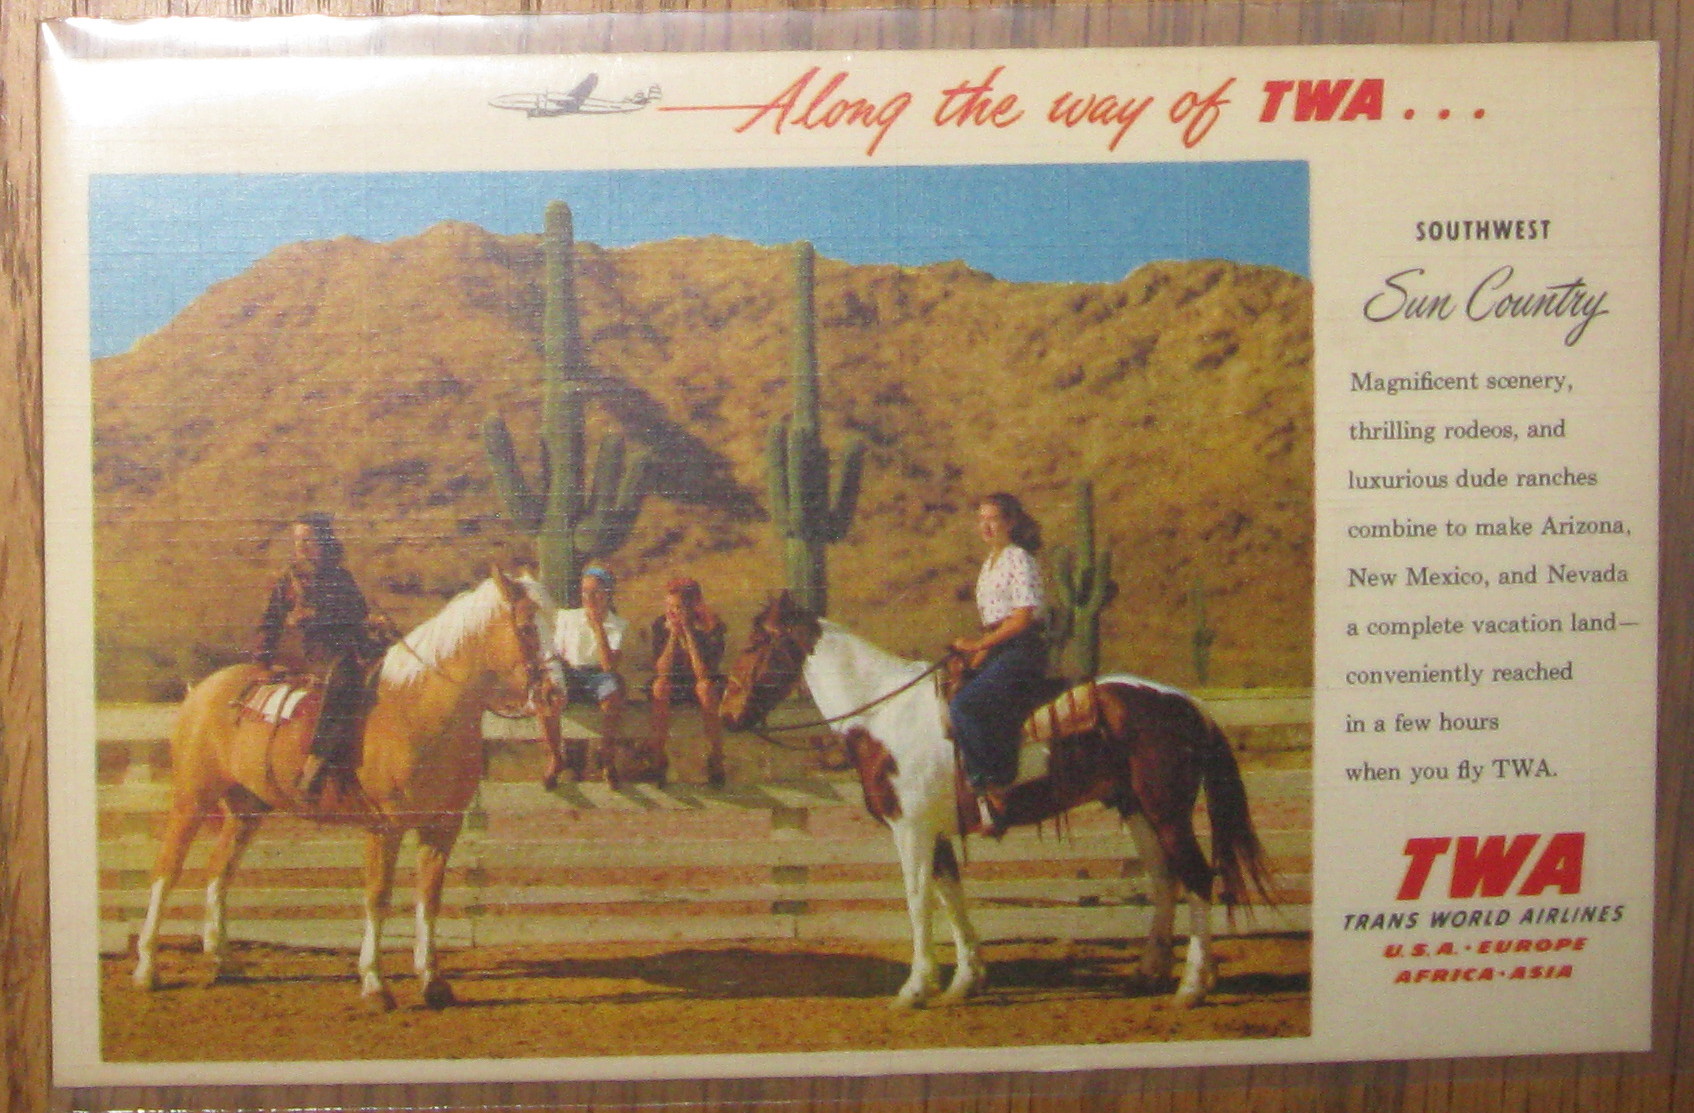 Along the way of TWA Southwest Sun country